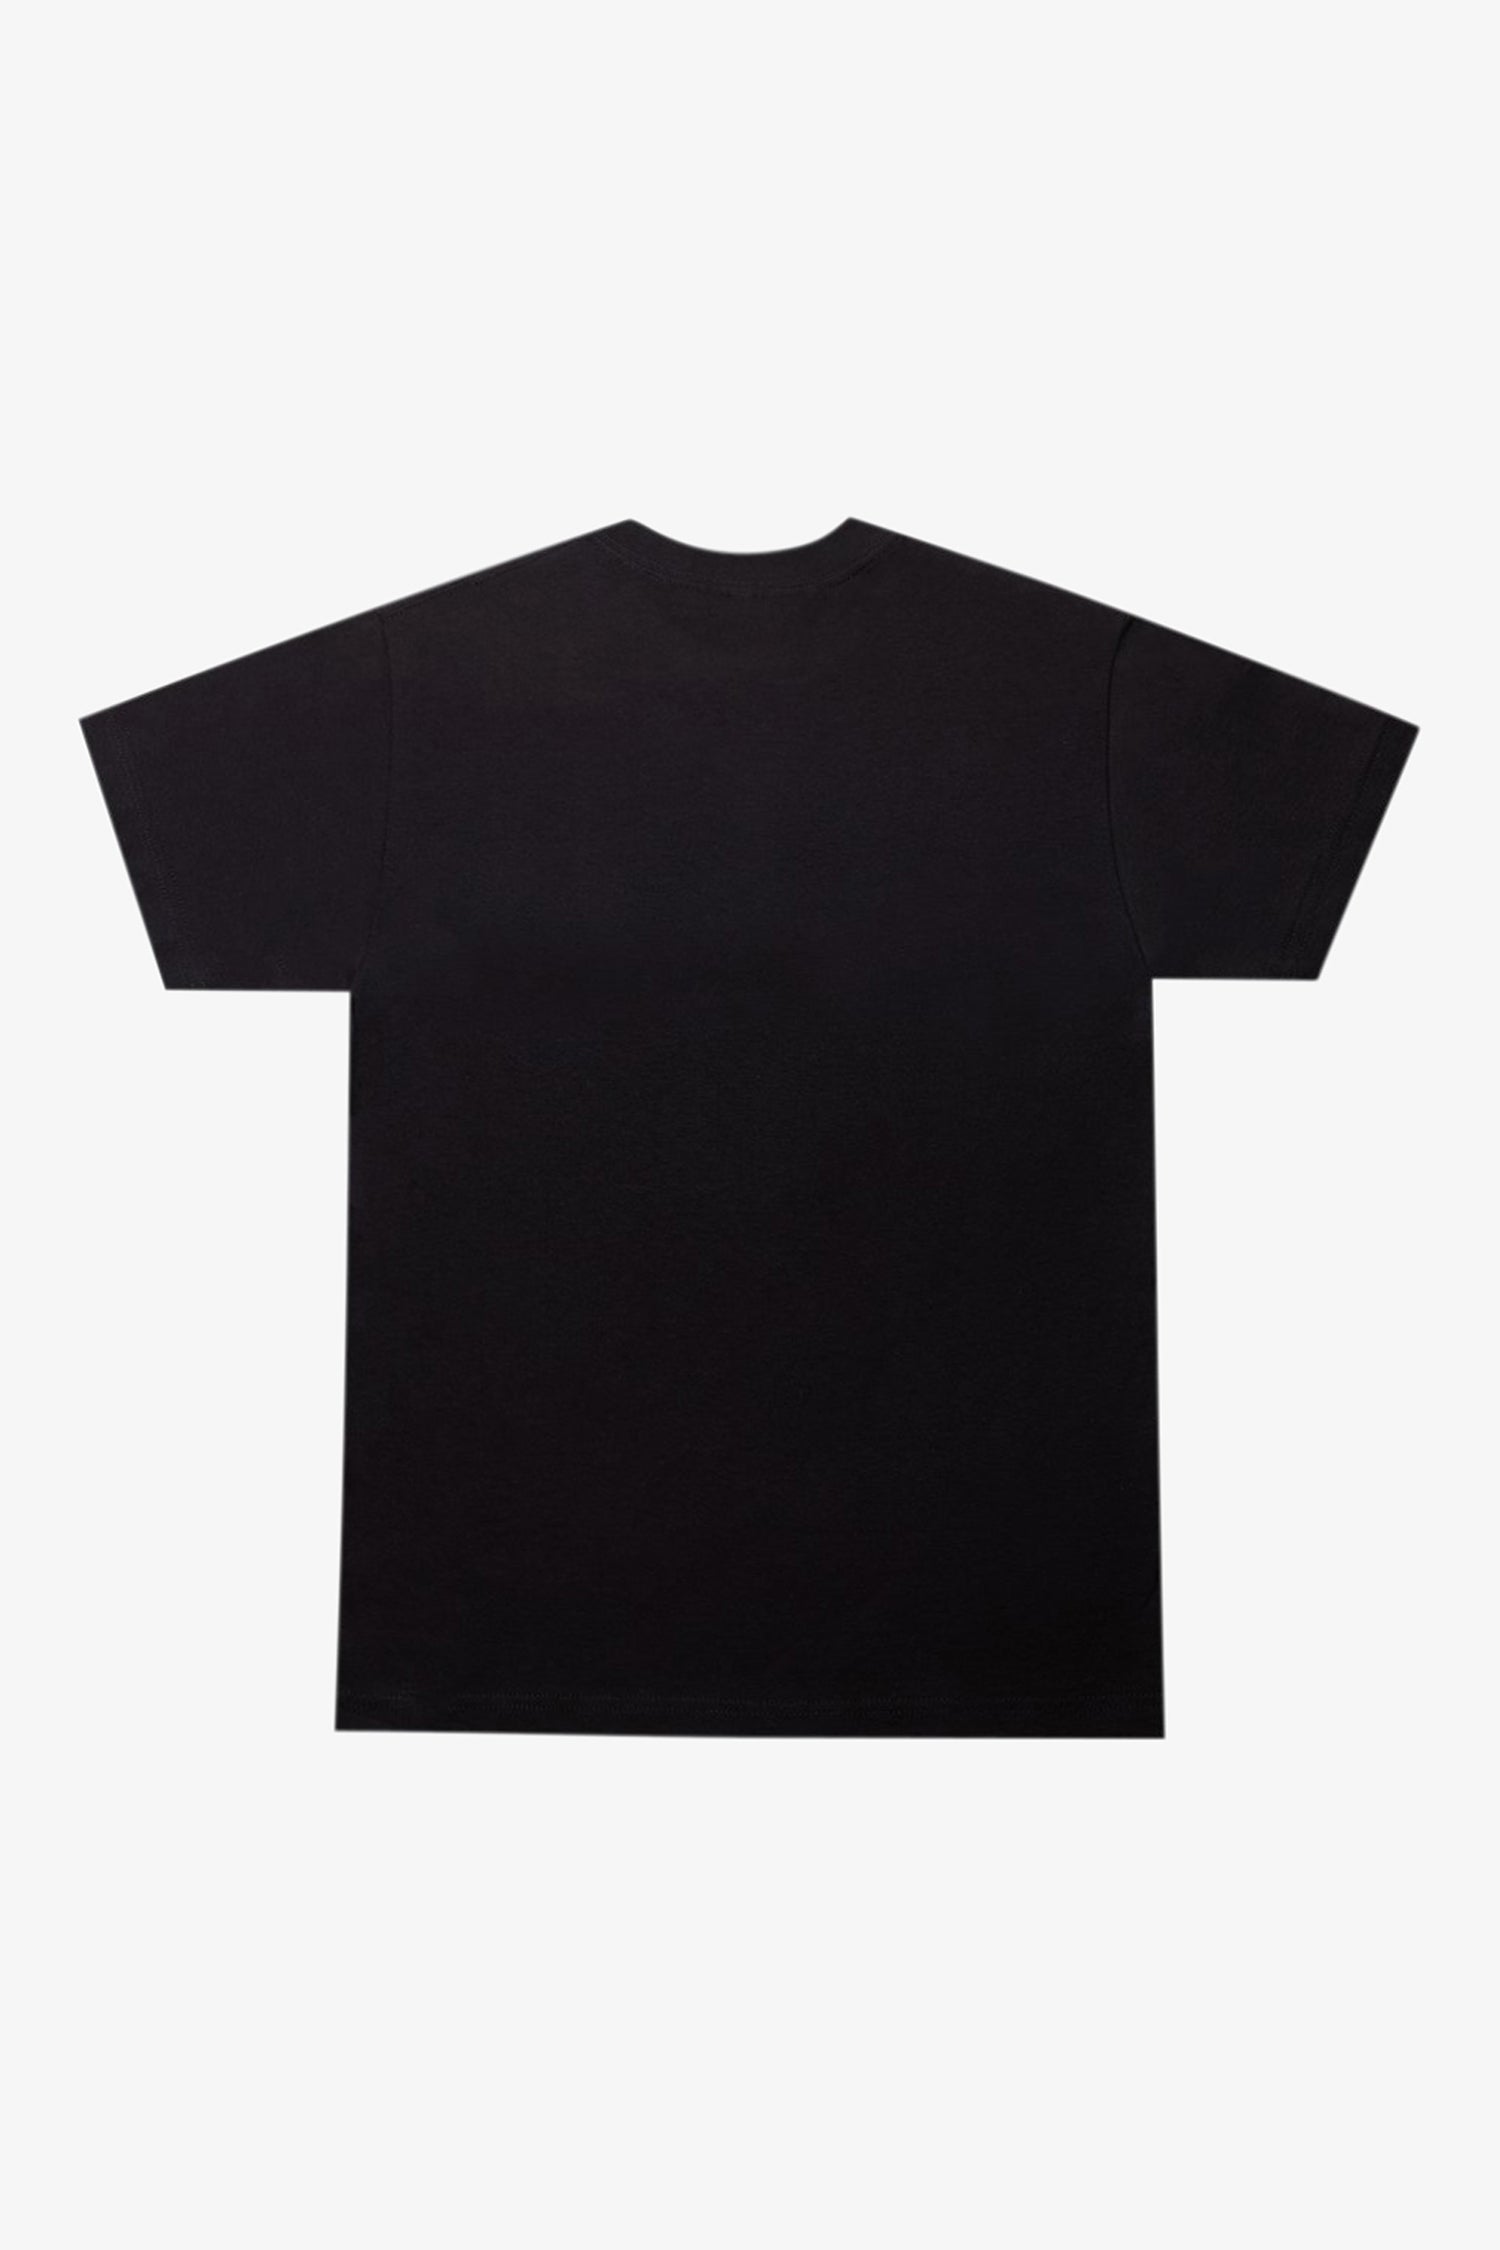 Selectshop FRAME - PLEASURES Vibration Tee T-Shirts Dubai